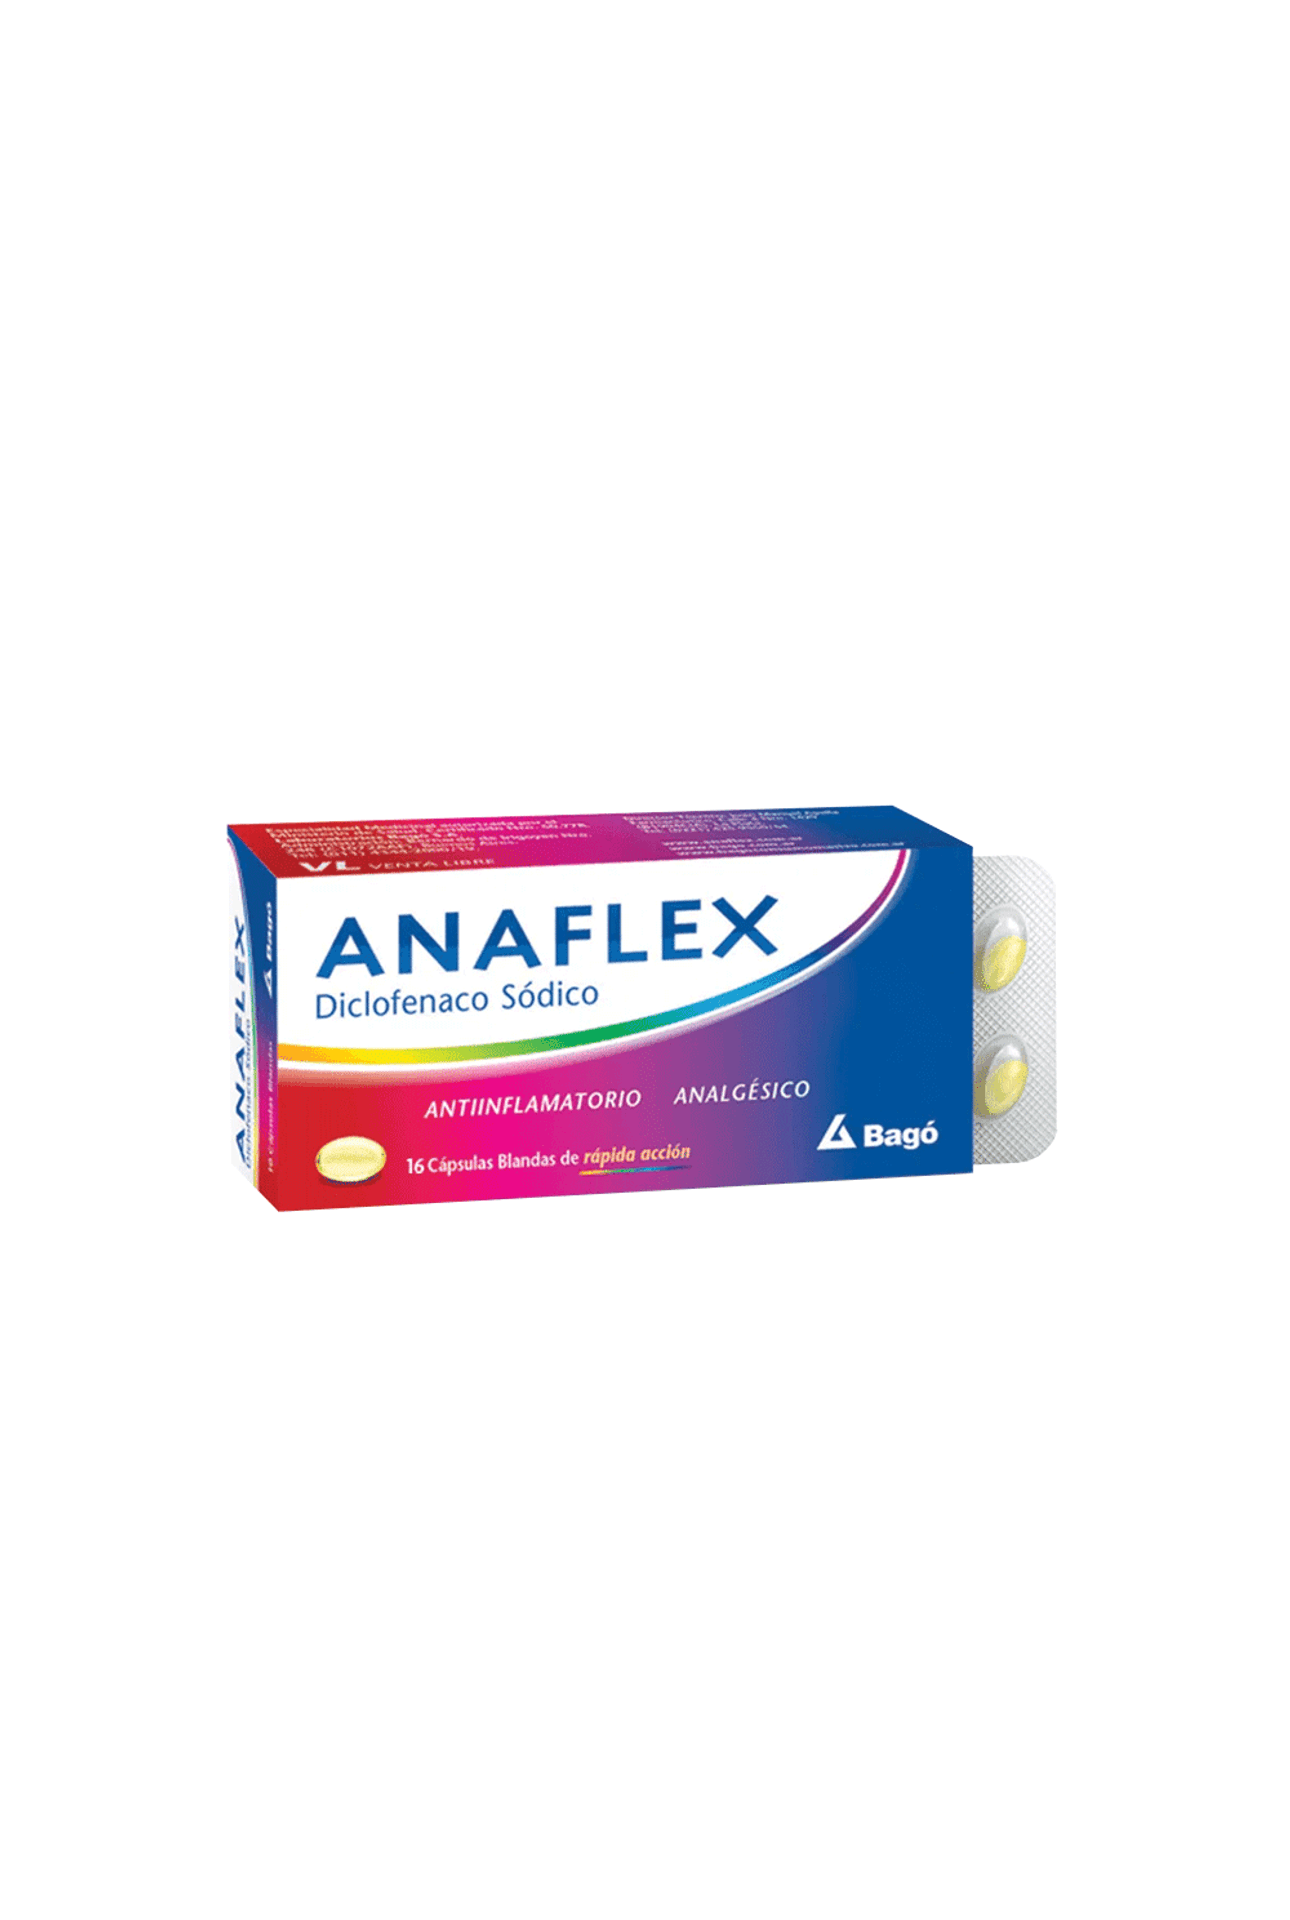 Anaflex-Rapida-Accion-x-16-Capsulas-Blandas-Anaflex